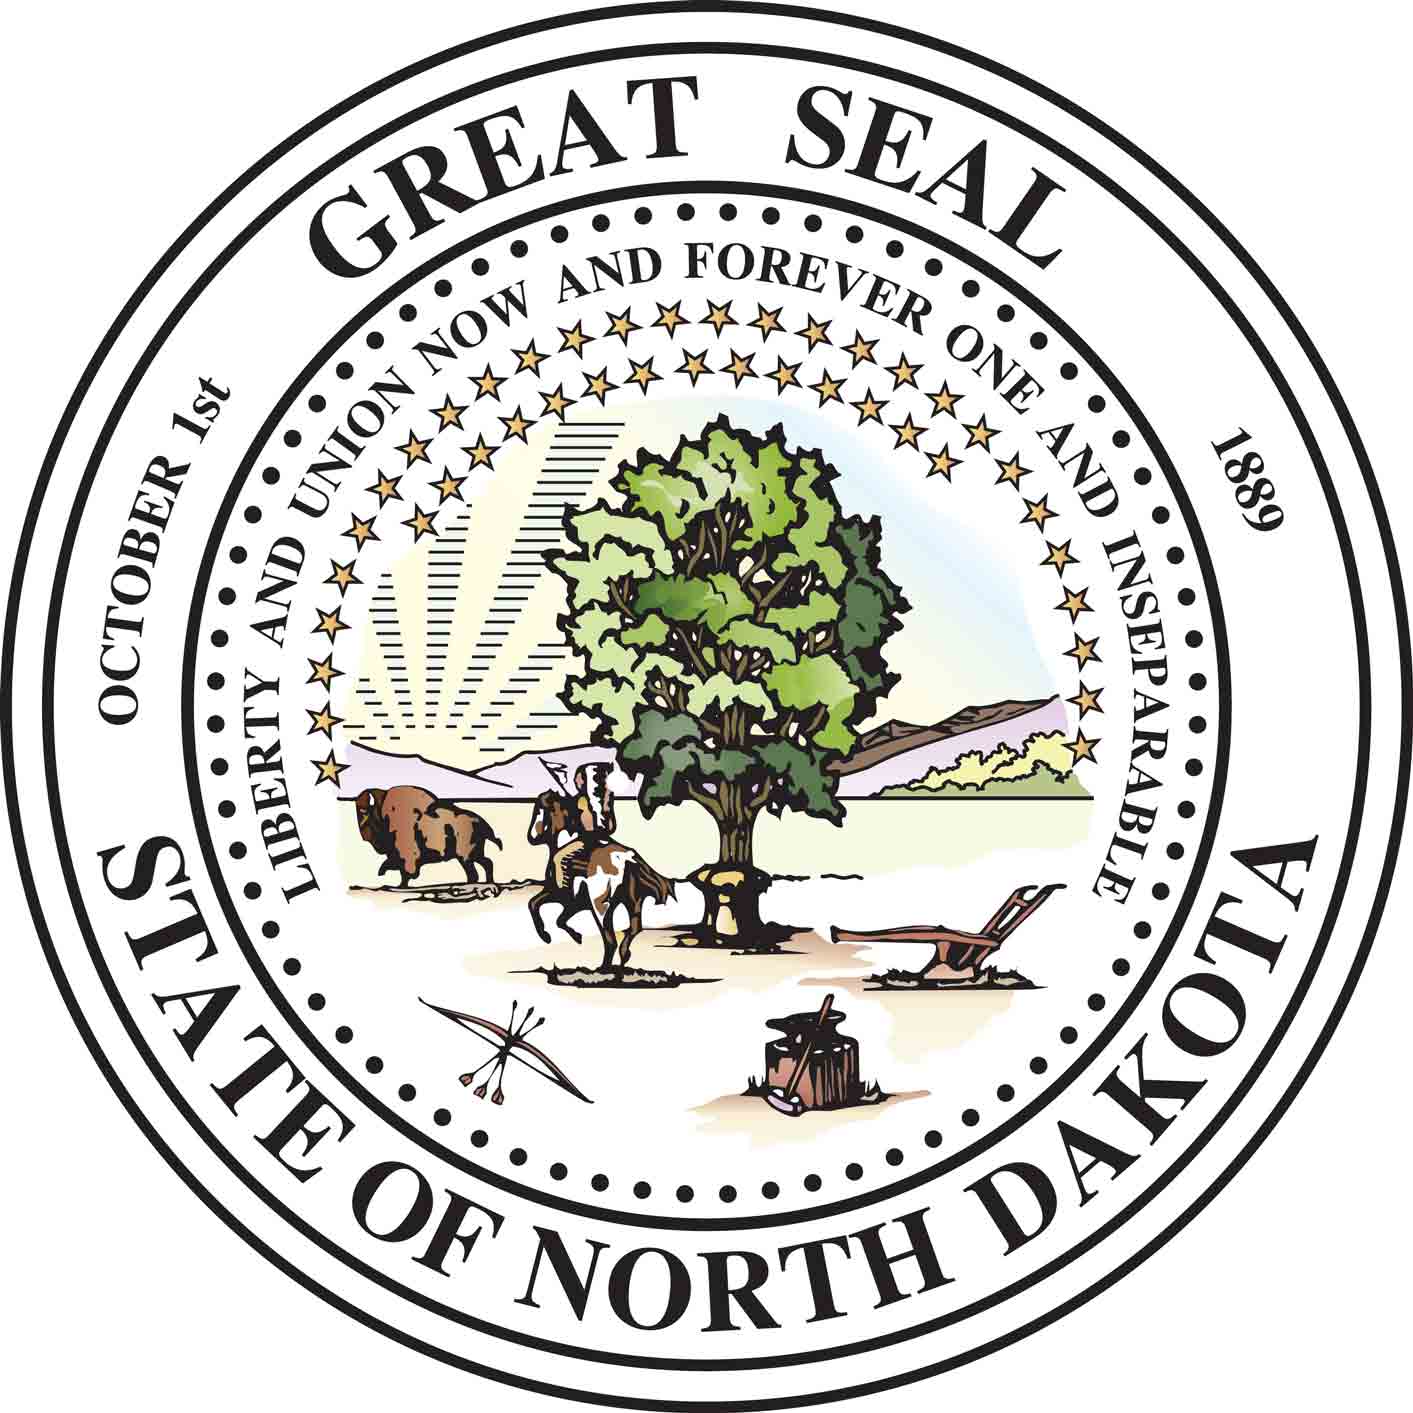 The Great Seal of North Dakota